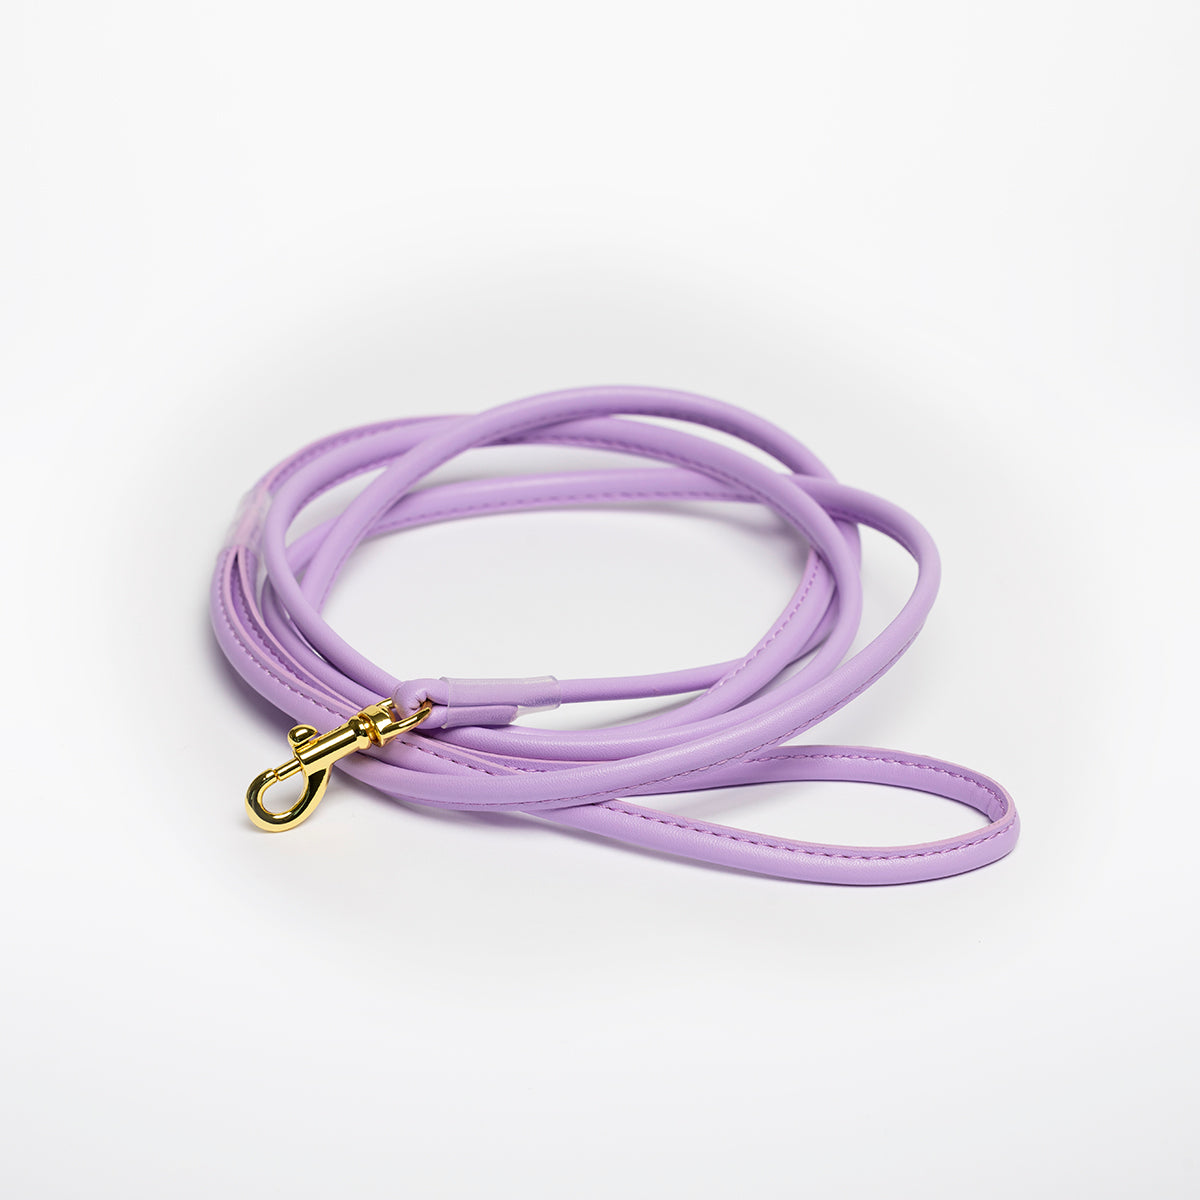 violet-dog-leash-small.jpg